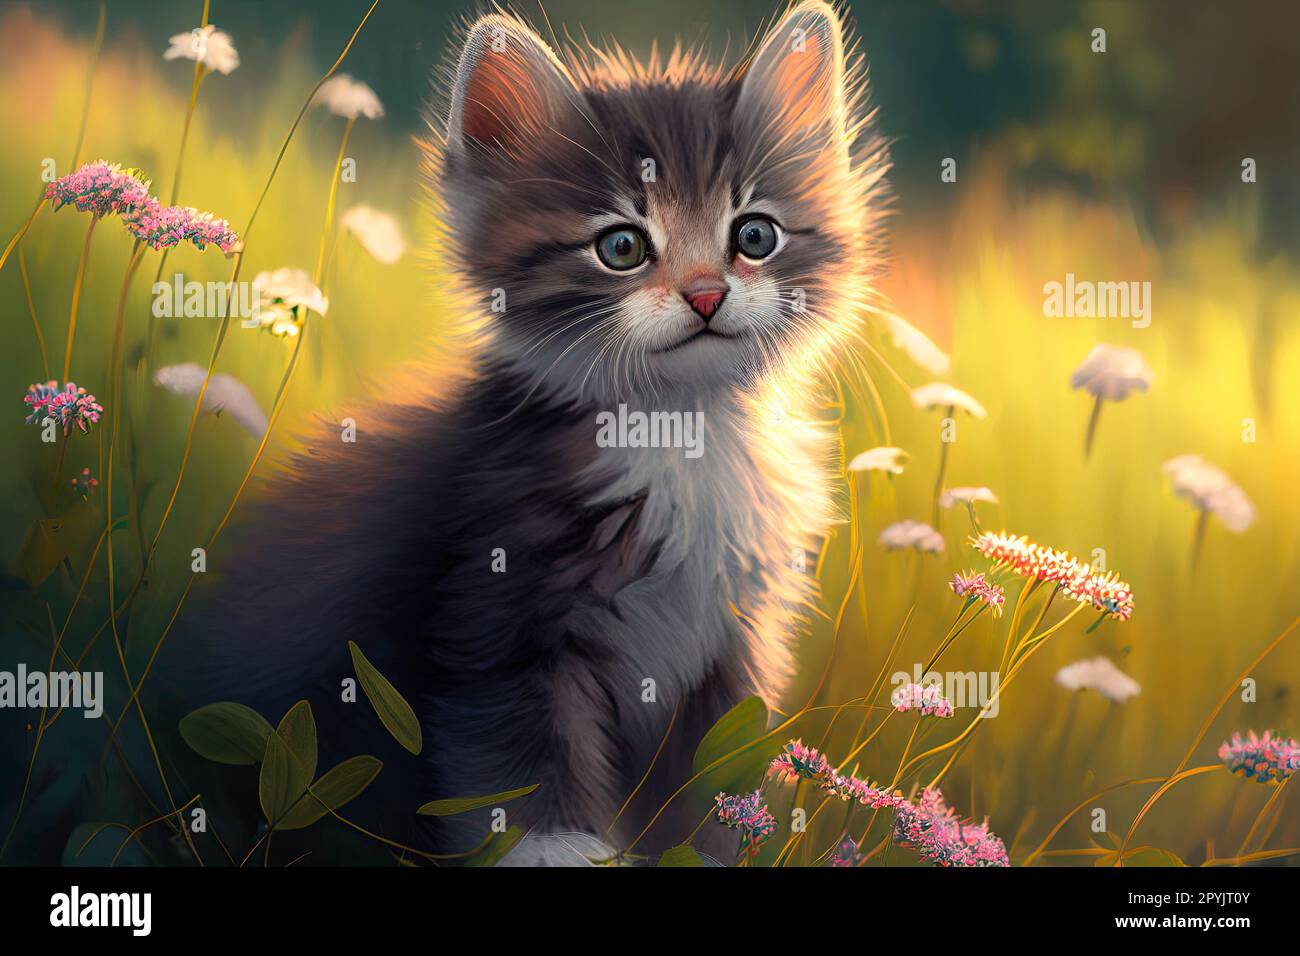 Cute little kitten in green meadow. Portrait of adorable kitty sitting in grass with sunlight. Stock Photo